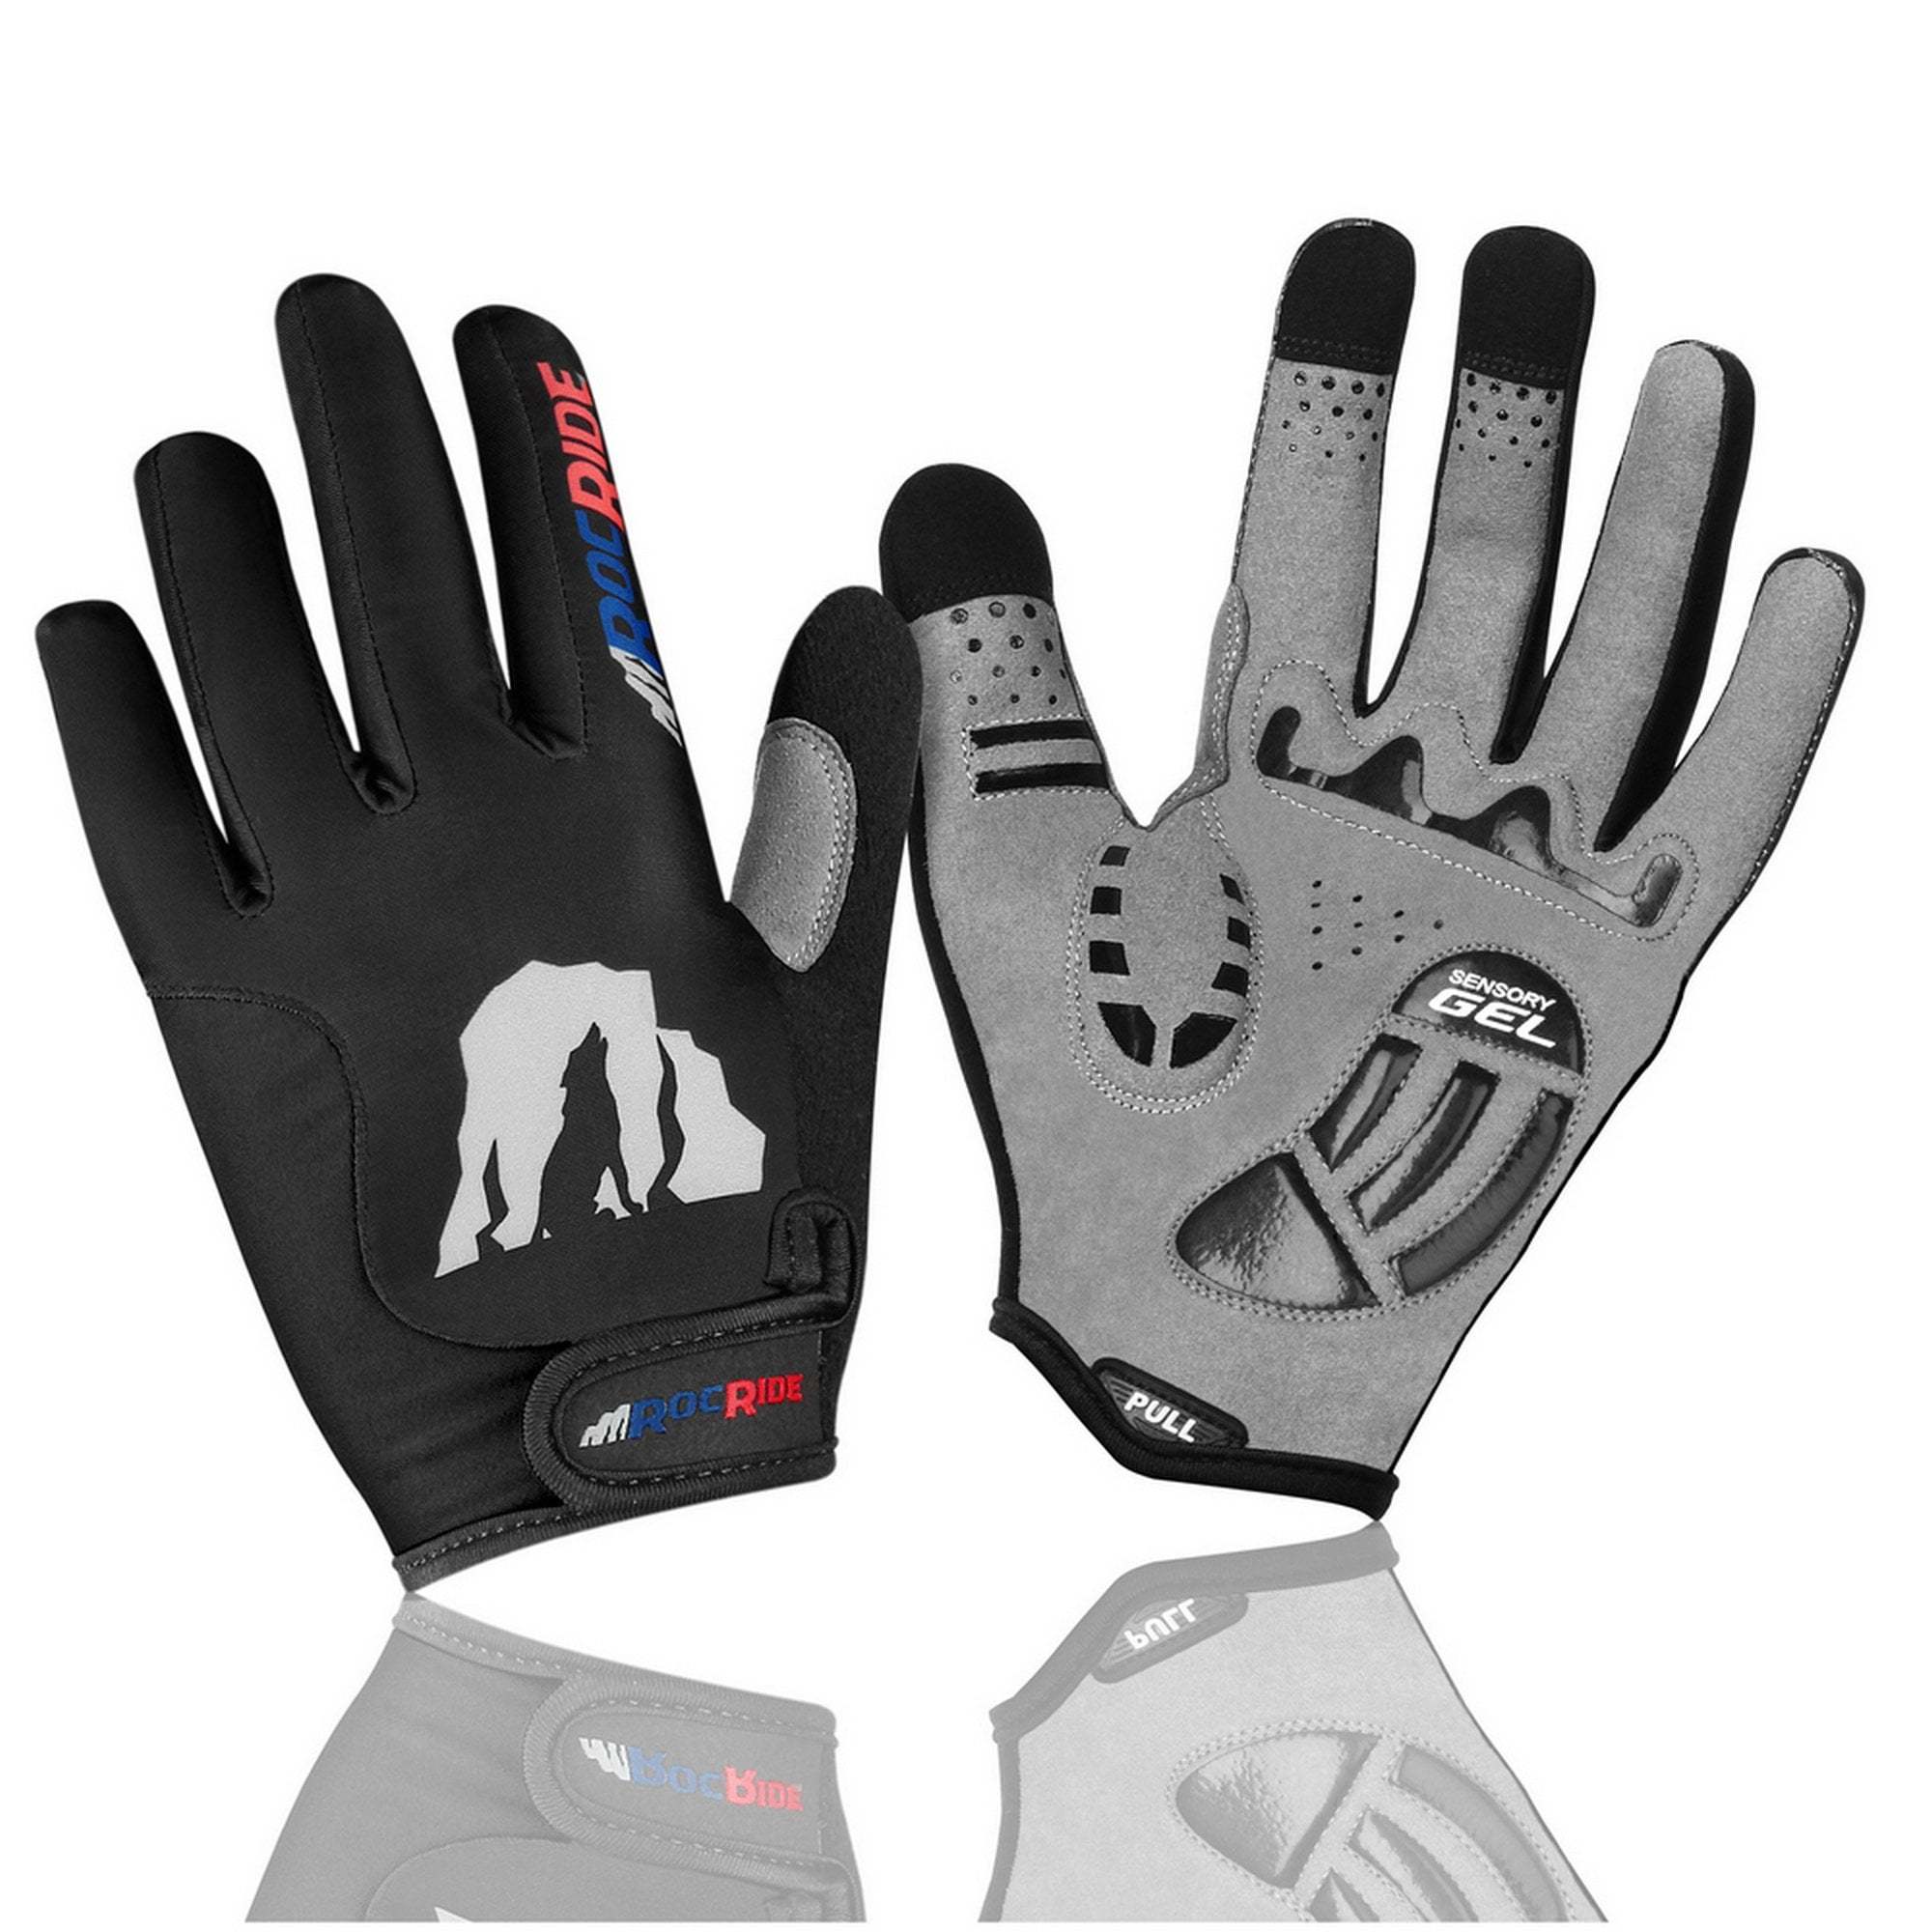 Souke Sports Winter Cycling Gloves Men Women Thermal Touch Screen Padded Bike Gloves for Mountain Biking Running 